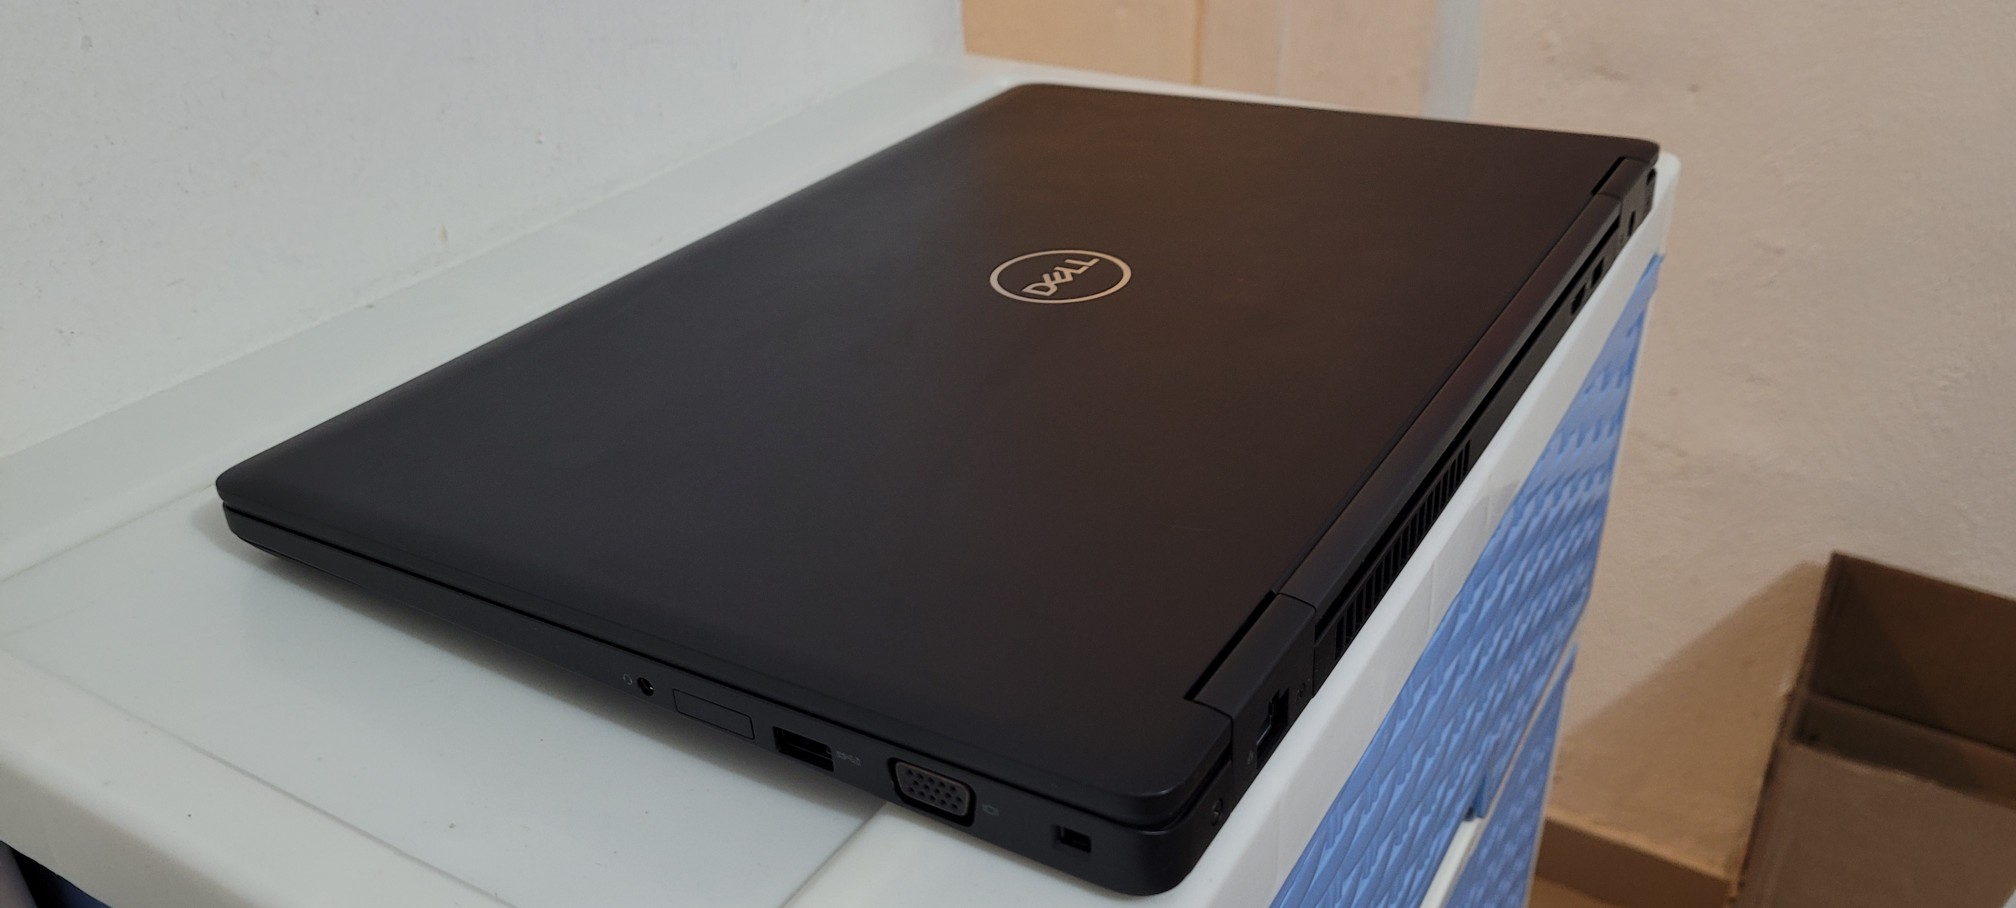 computadoras y laptops - Dell 5580 17 Pulg Core i5 7ma Gen Ram 8gb ddr4 Disco SSD New hdmi 2